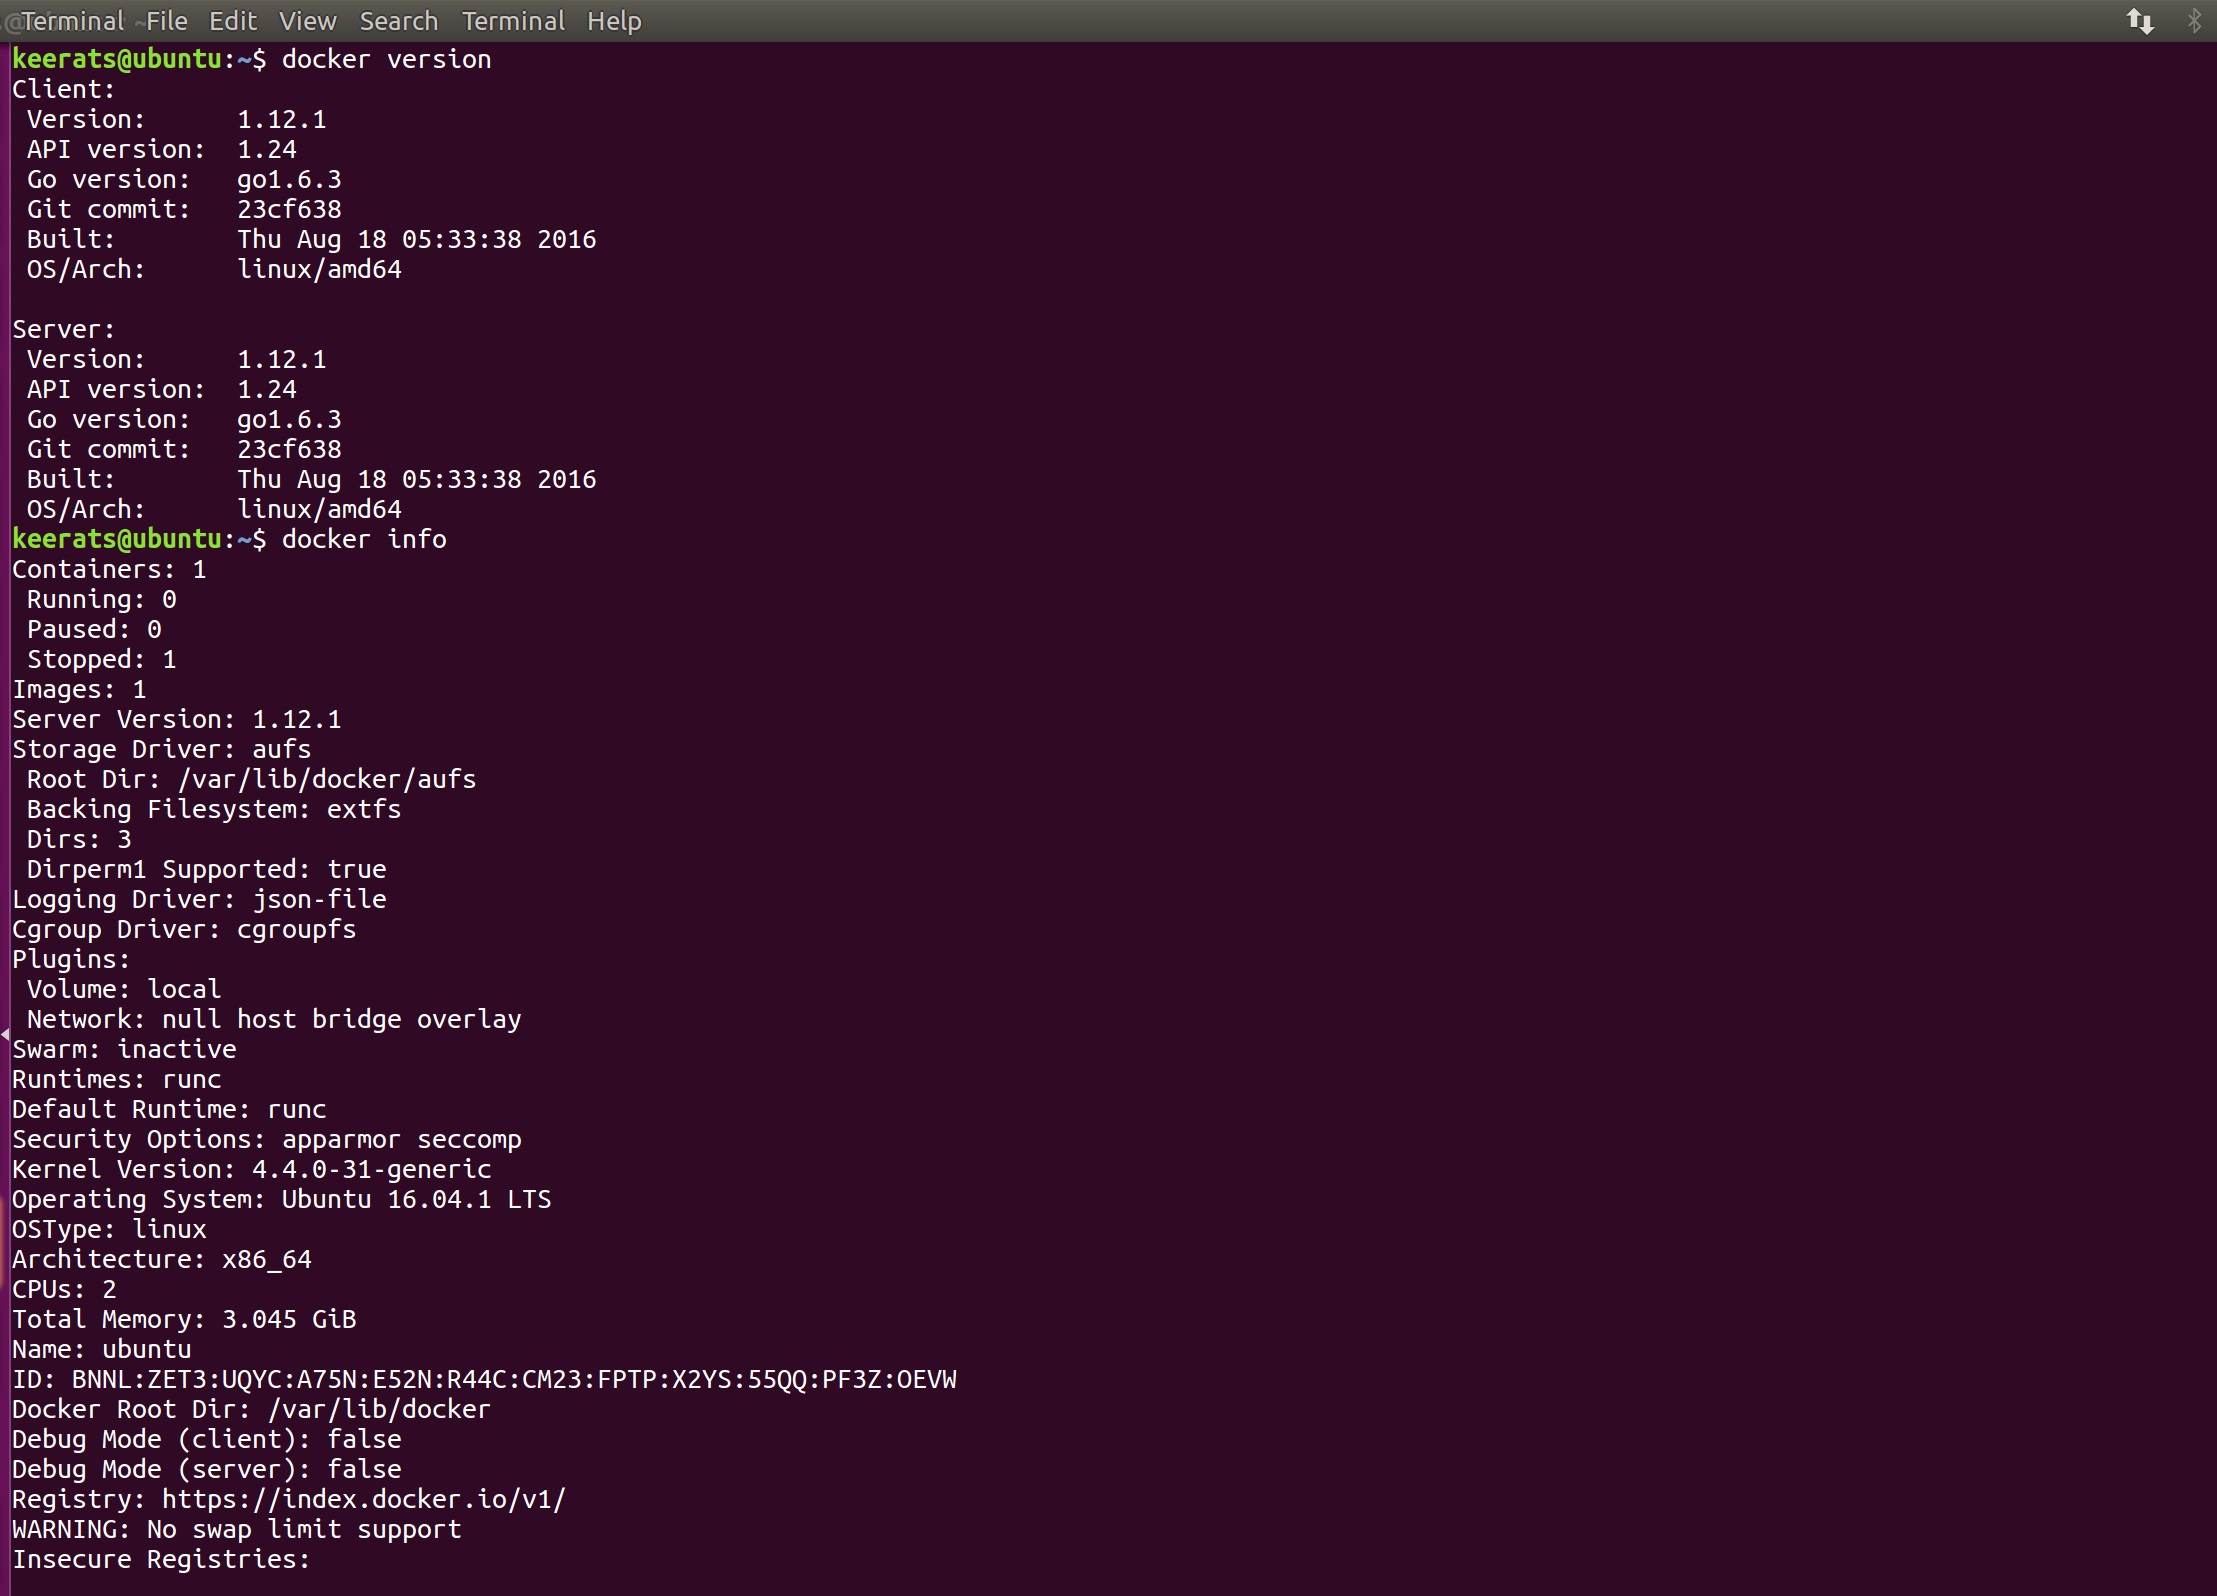 Verify Docker installation on Linux